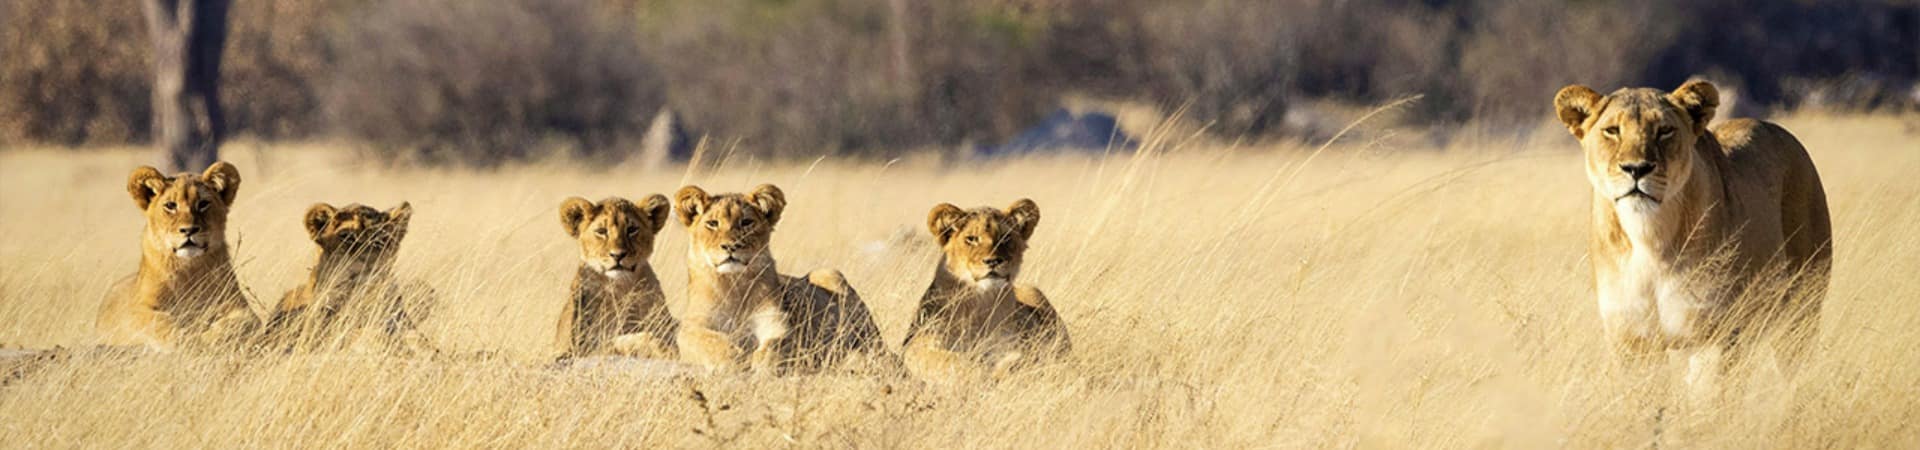 Zimbabue parque nacional hwange leoes